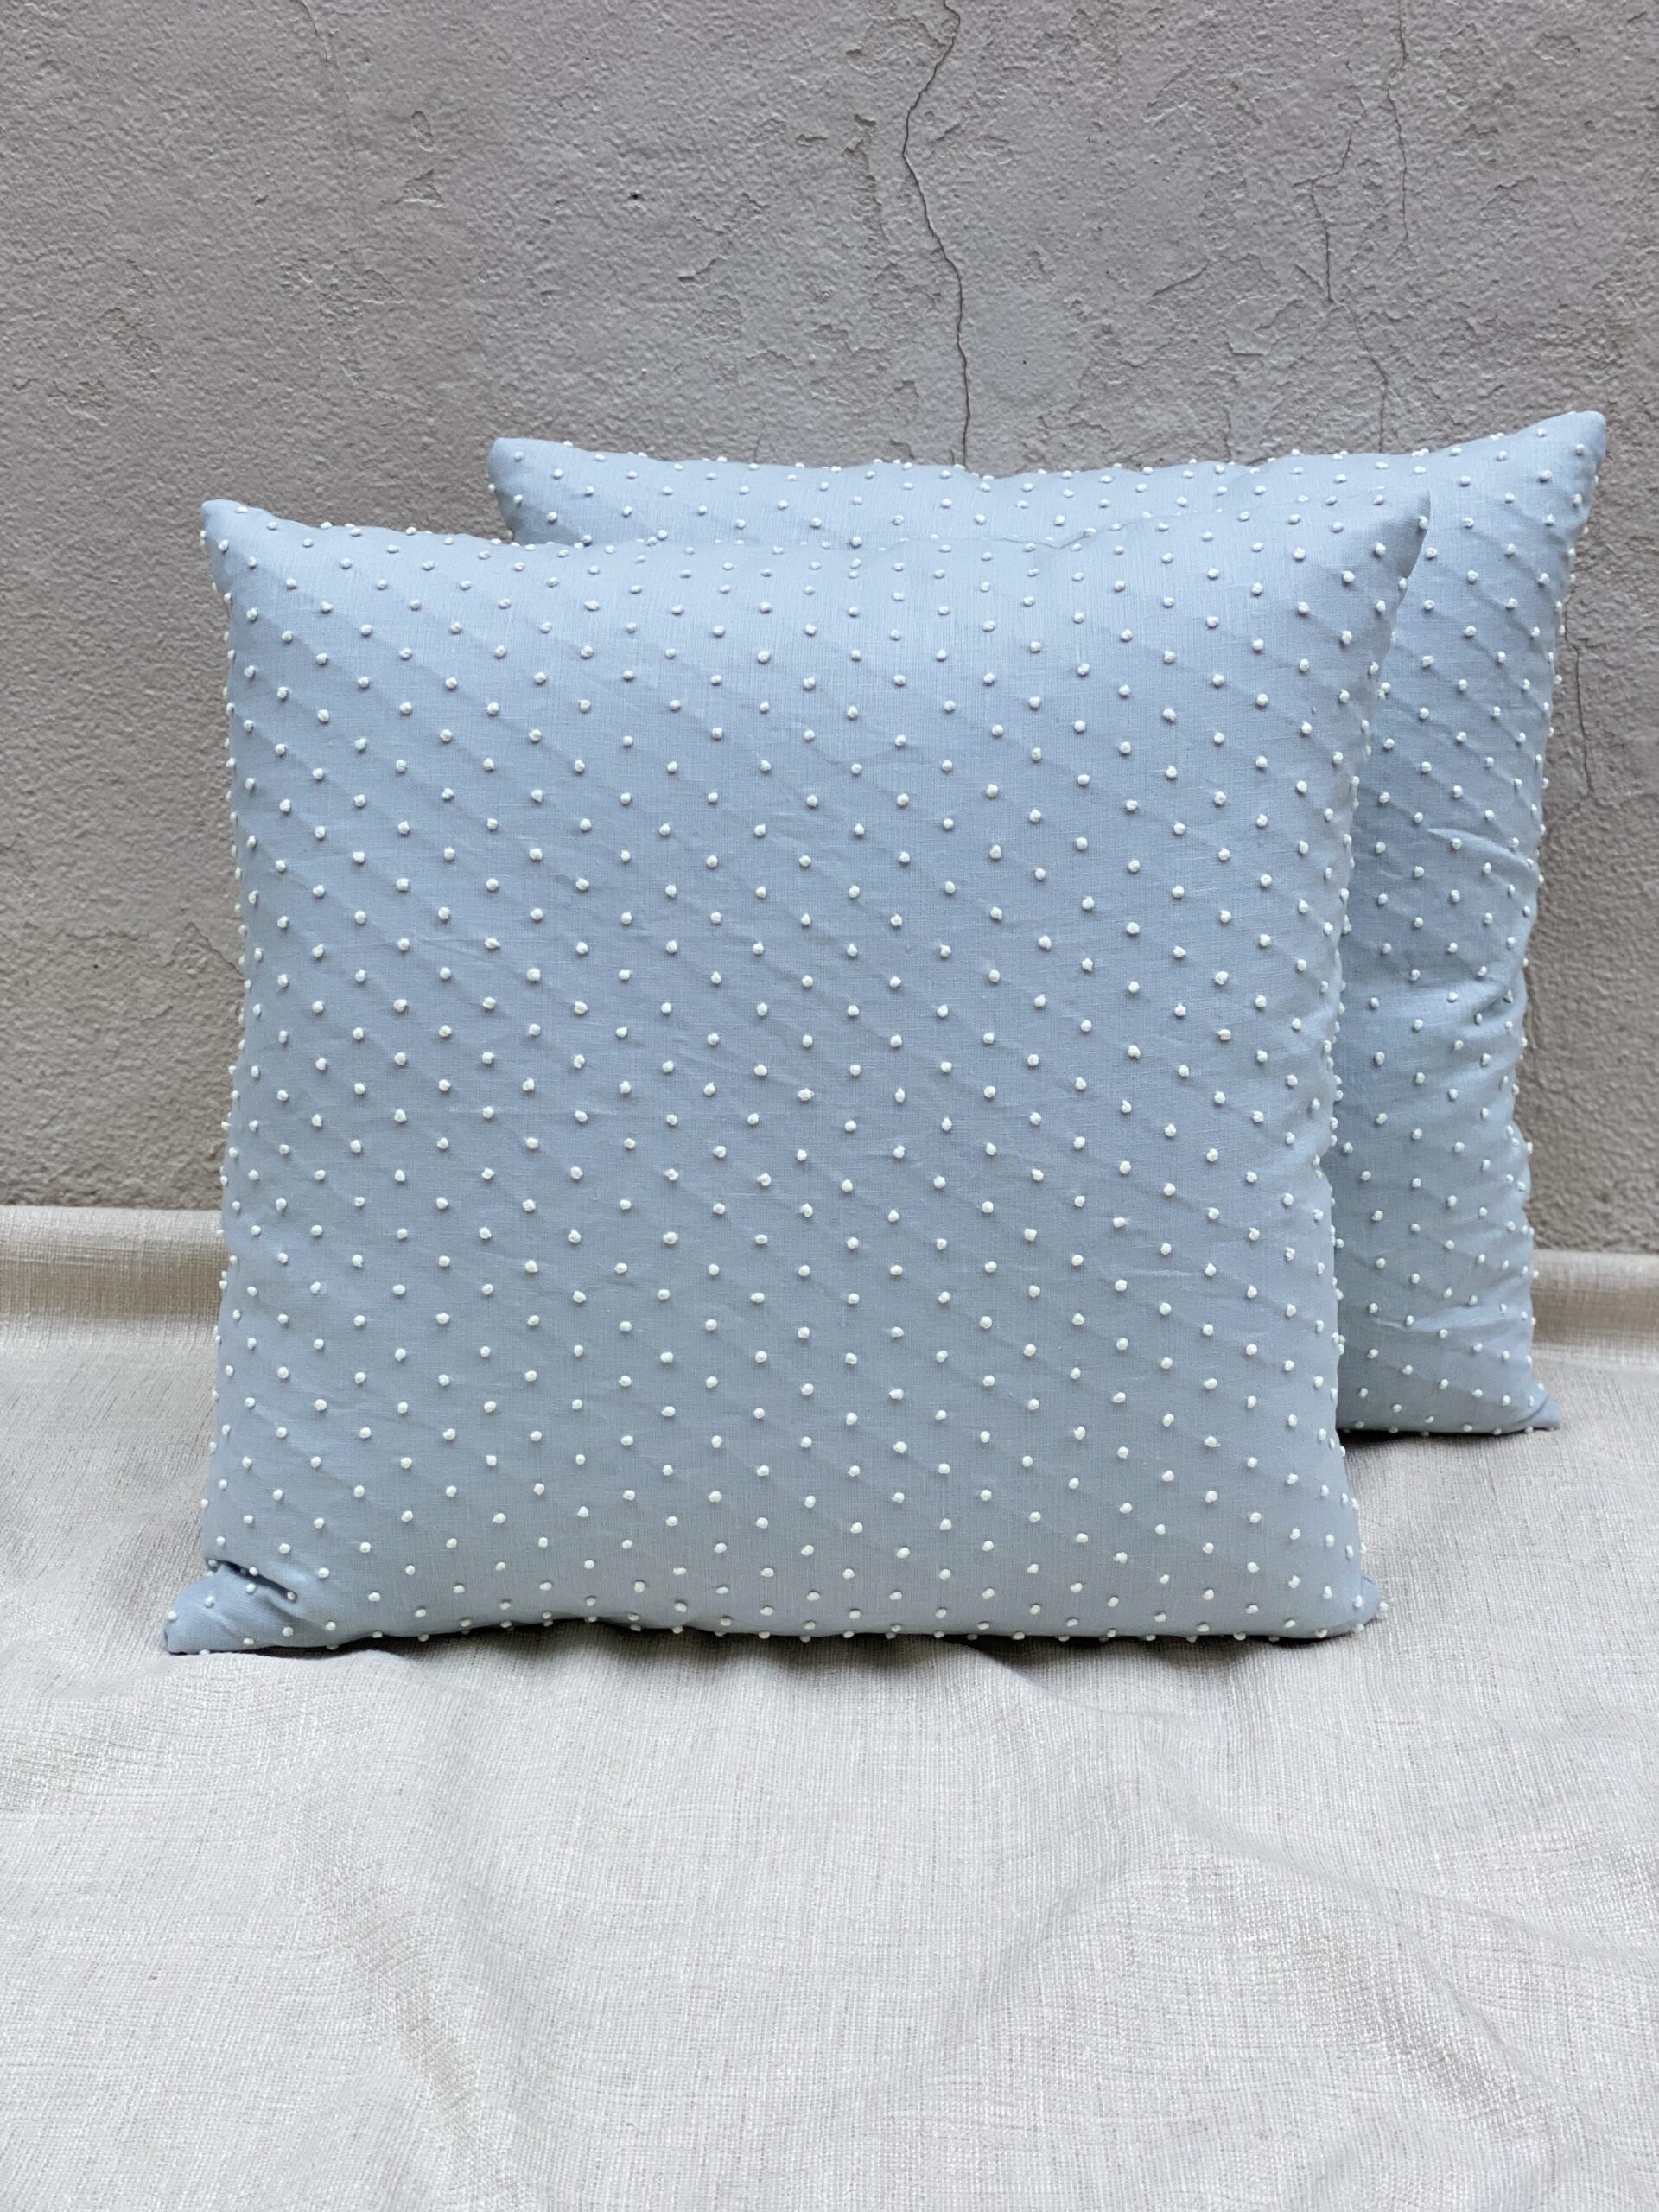 Schumacher Pebble Embroidery Pillows